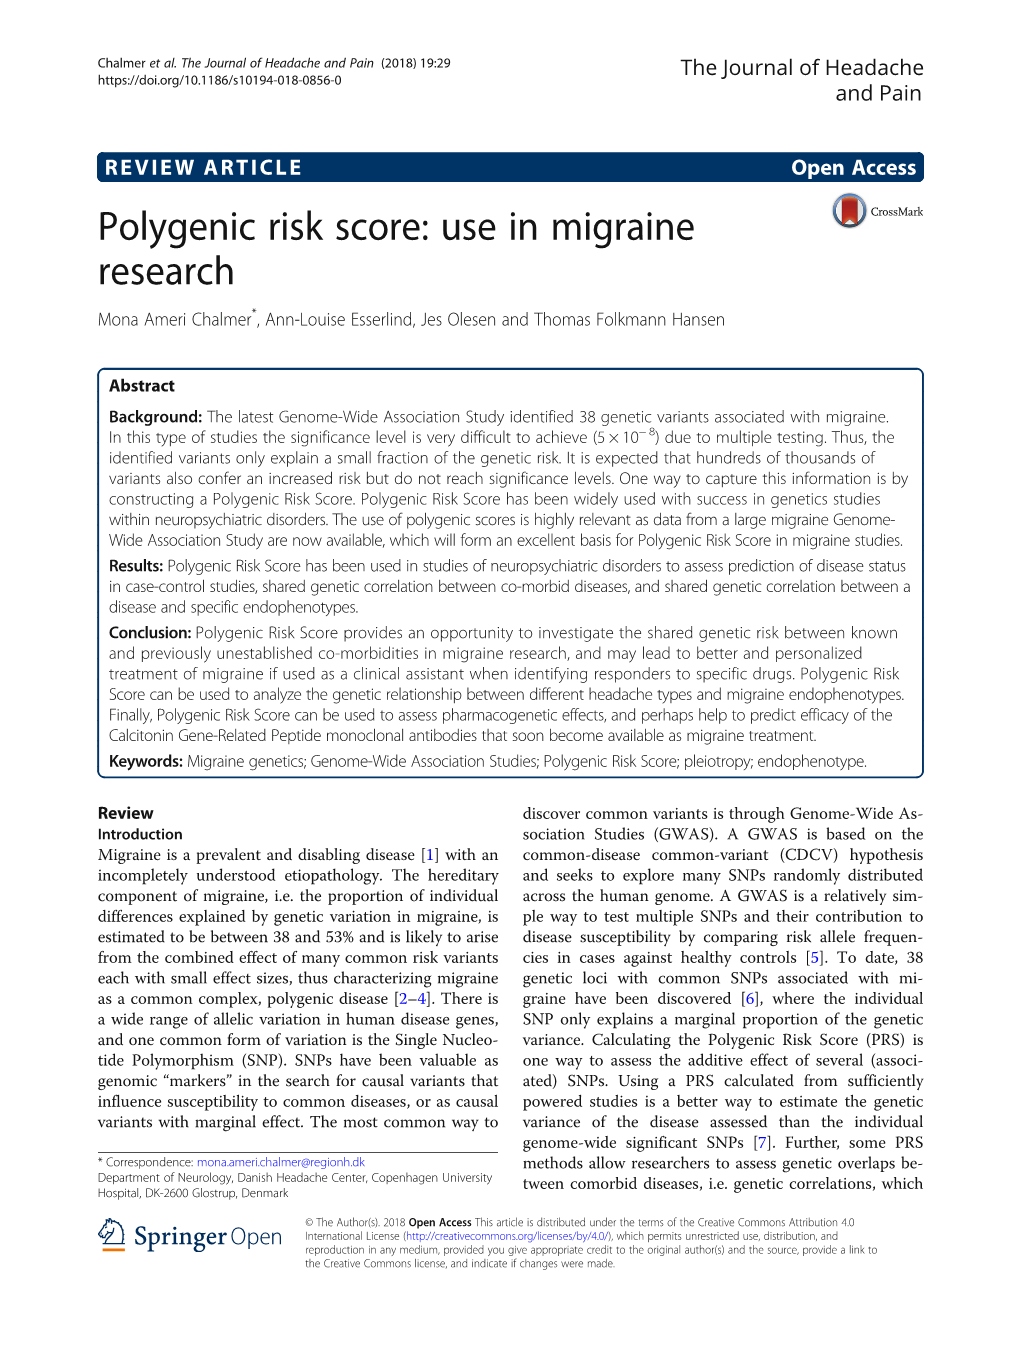 Polygenic Risk Score: Use in Migraine Research Mona Ameri Chalmer*, Ann-Louise Esserlind, Jes Olesen and Thomas Folkmann Hansen